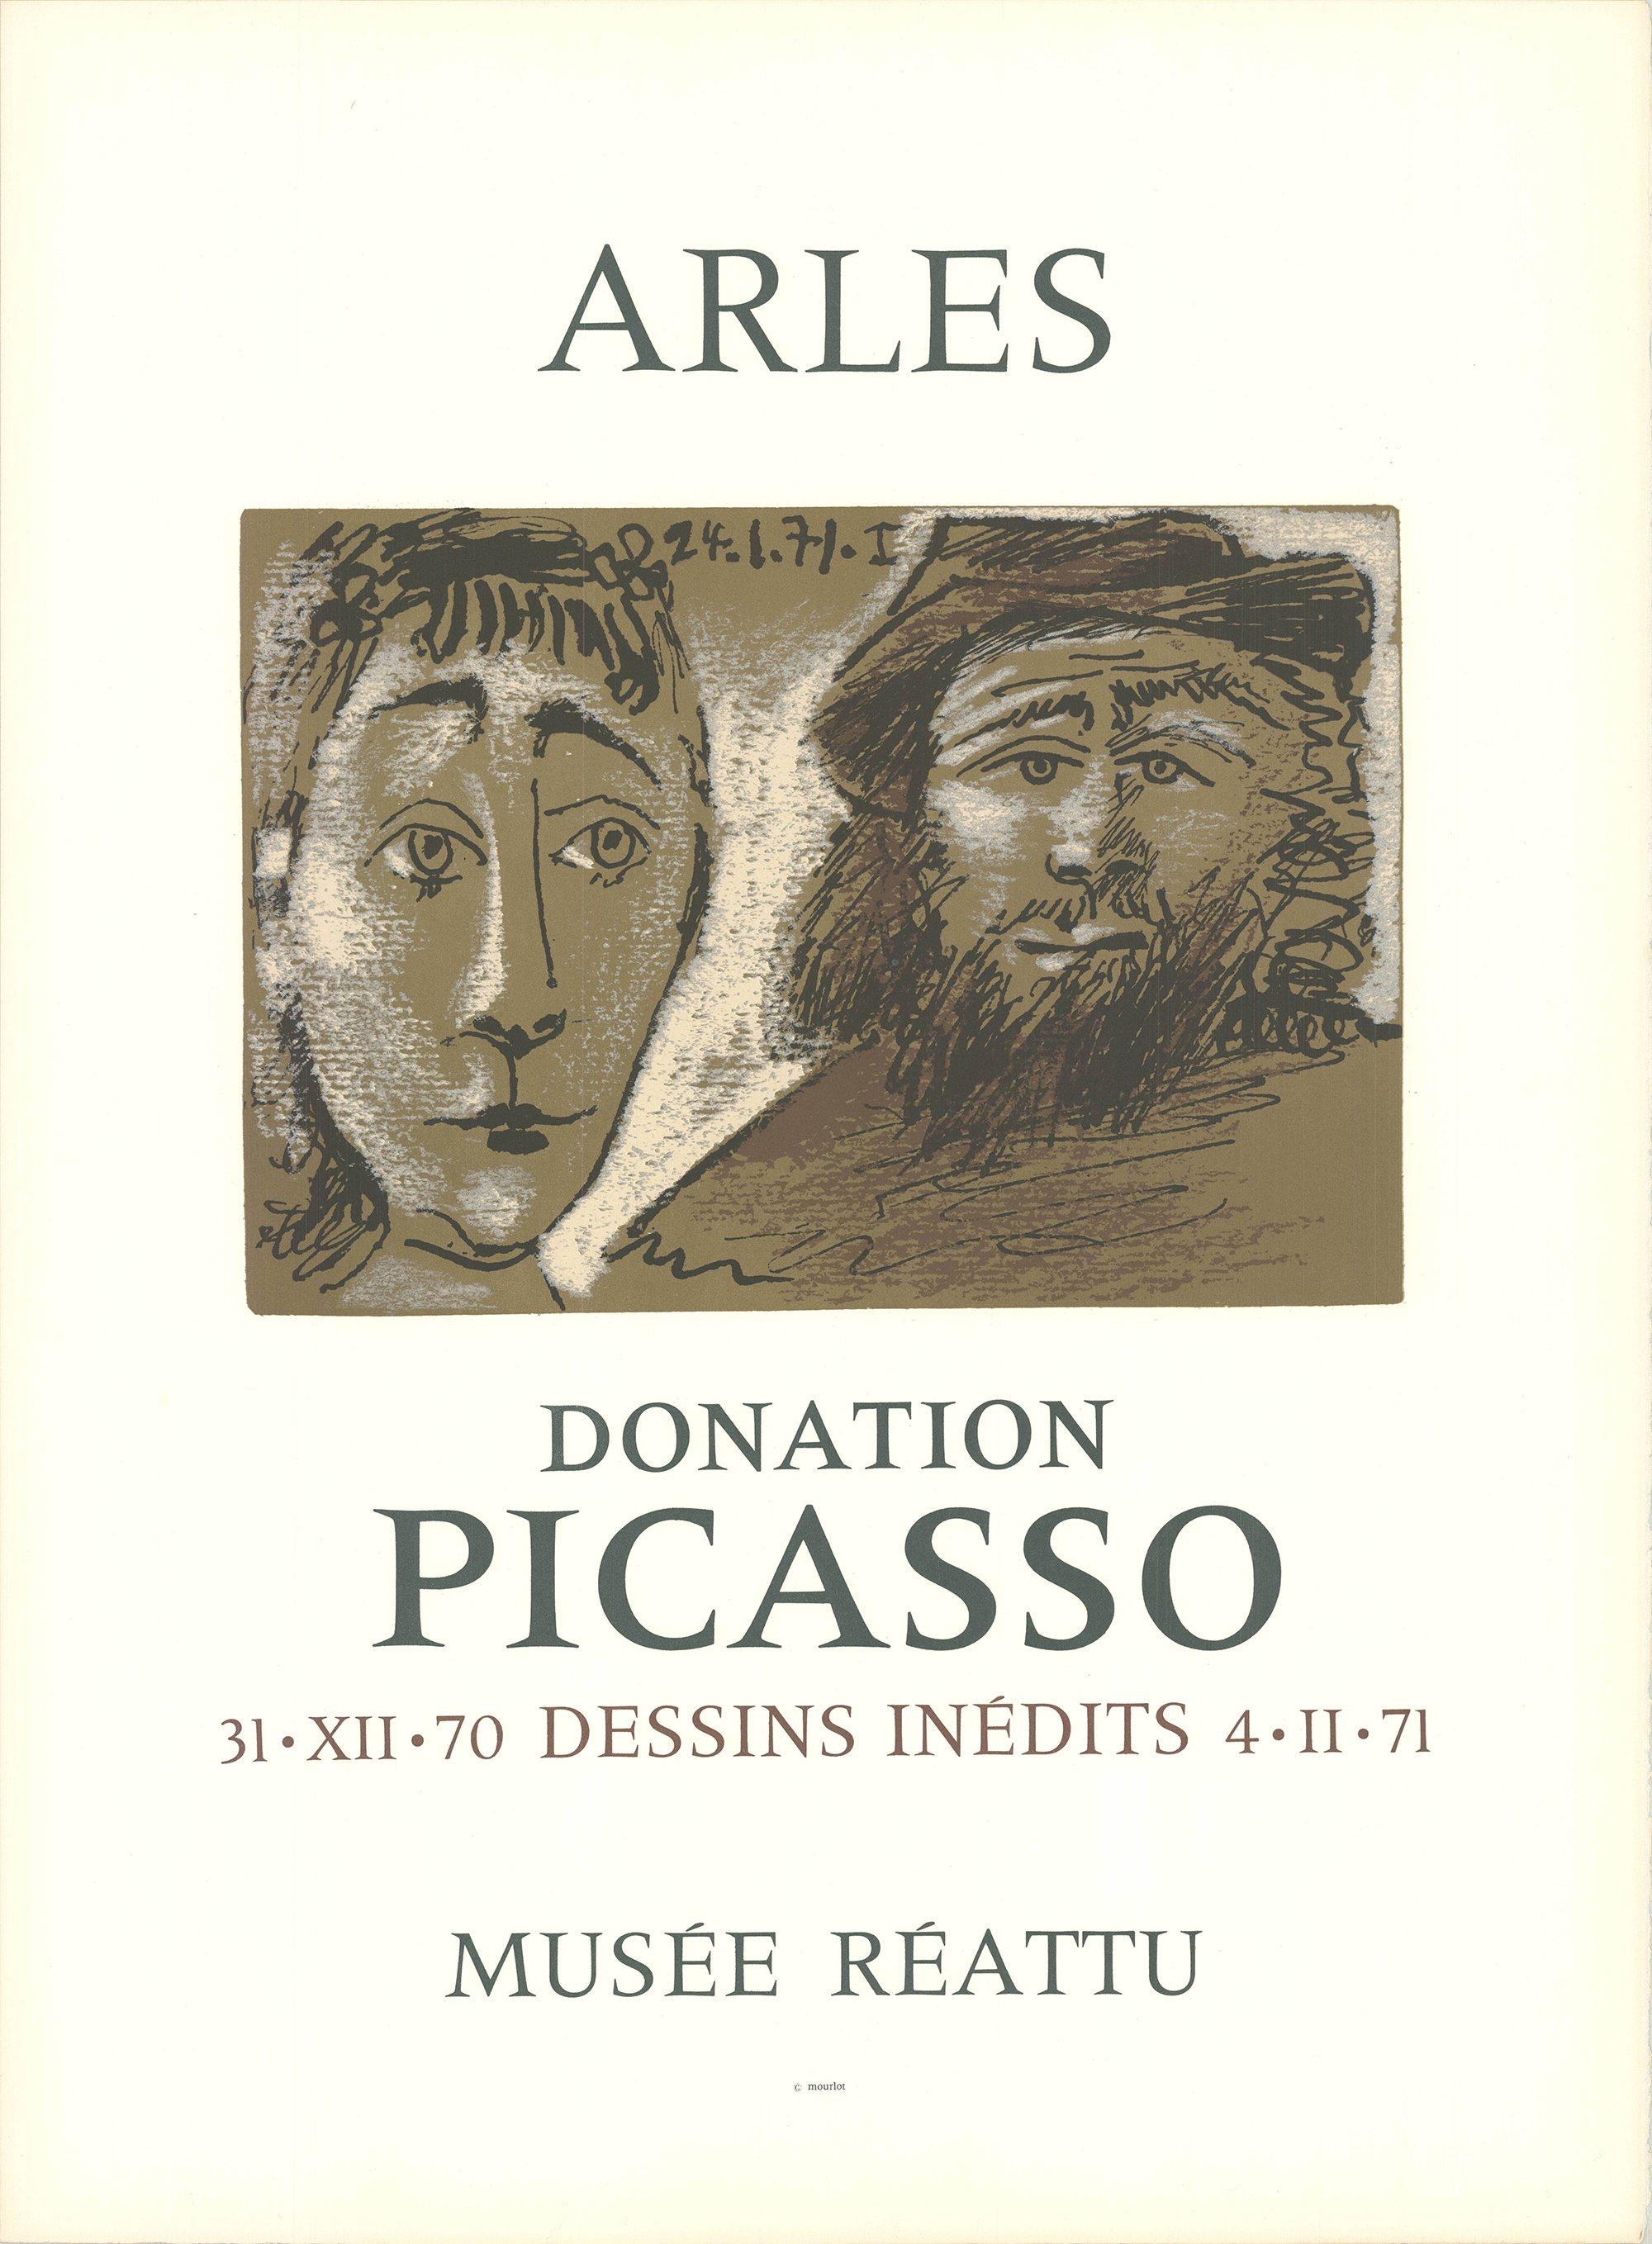 1971 Nach Pablo Picasso „Arles“ Steinlithographie, Steinlithographie